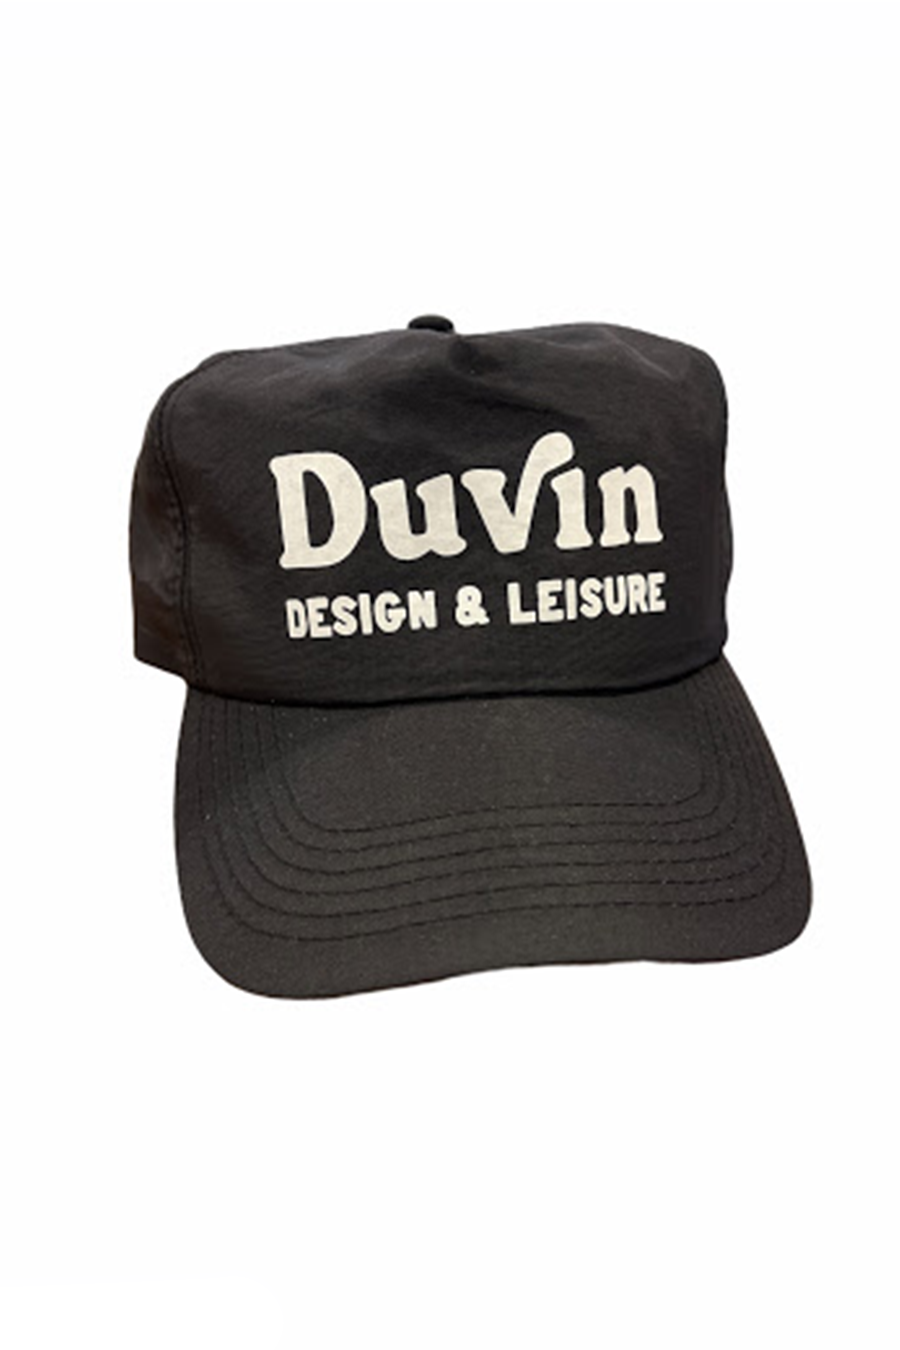 Logo Leisure Hat | Black - Main Image Number 1 of 1